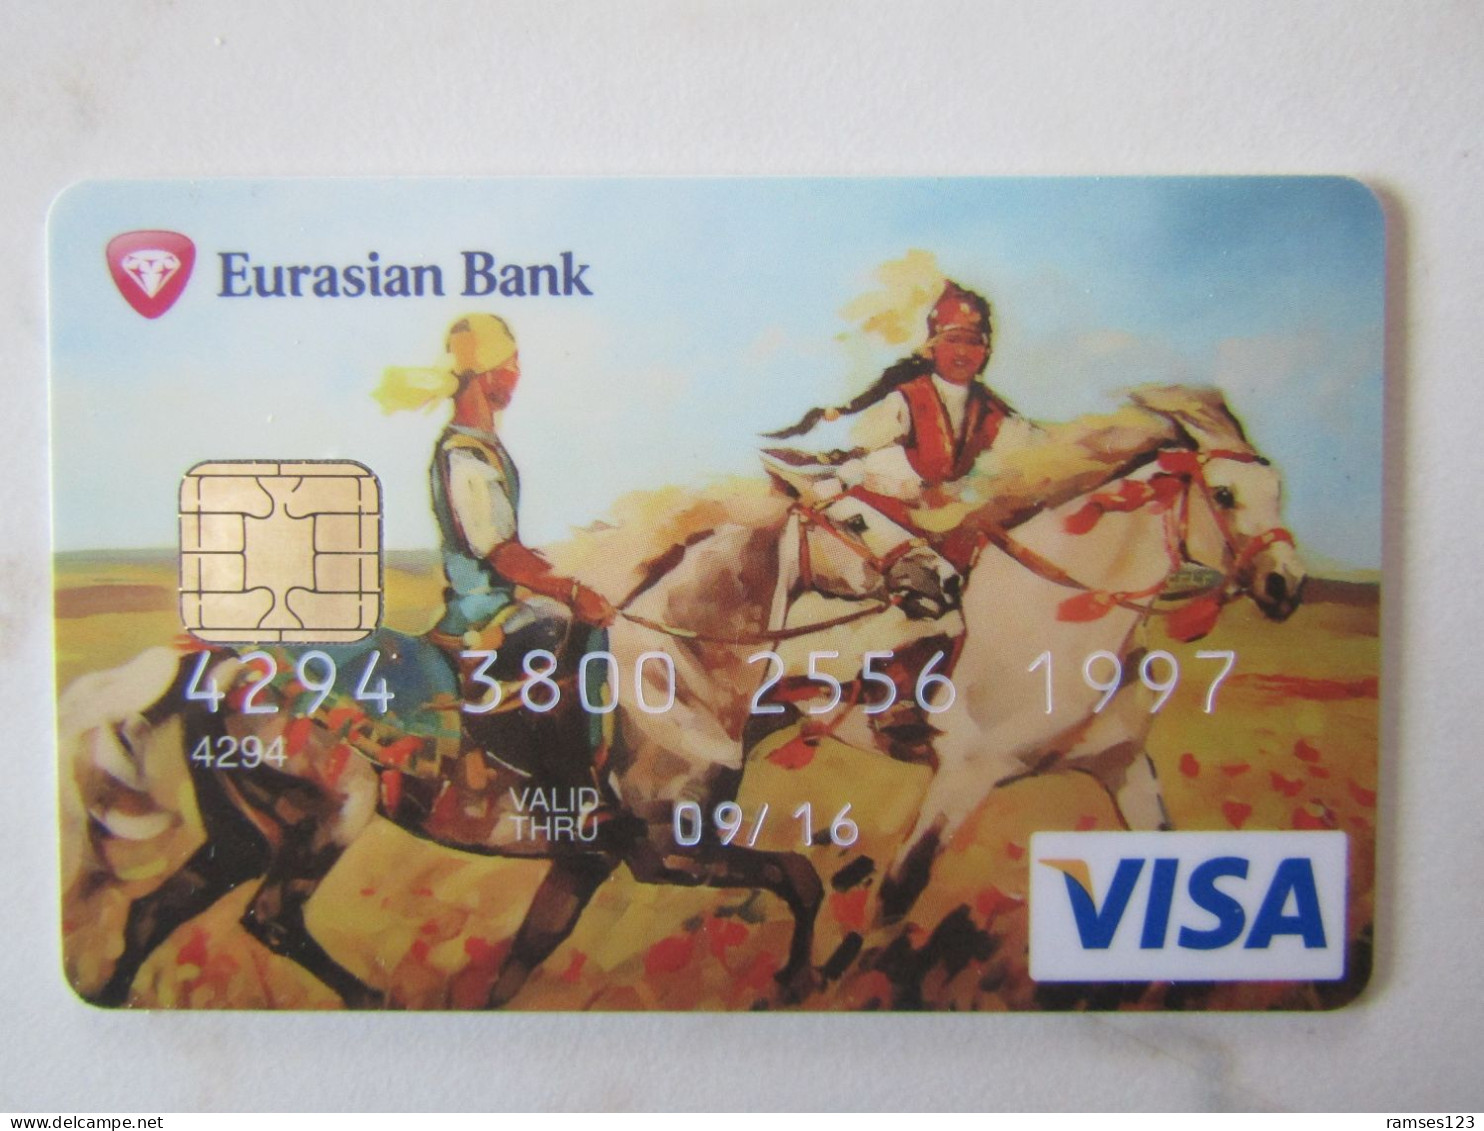 DIFFICULT   AND BEAUTIFUL   VISA CARD   CHEVEAUX   KAZAKHSTAN   EURASIAN BANK - Kazakhstan